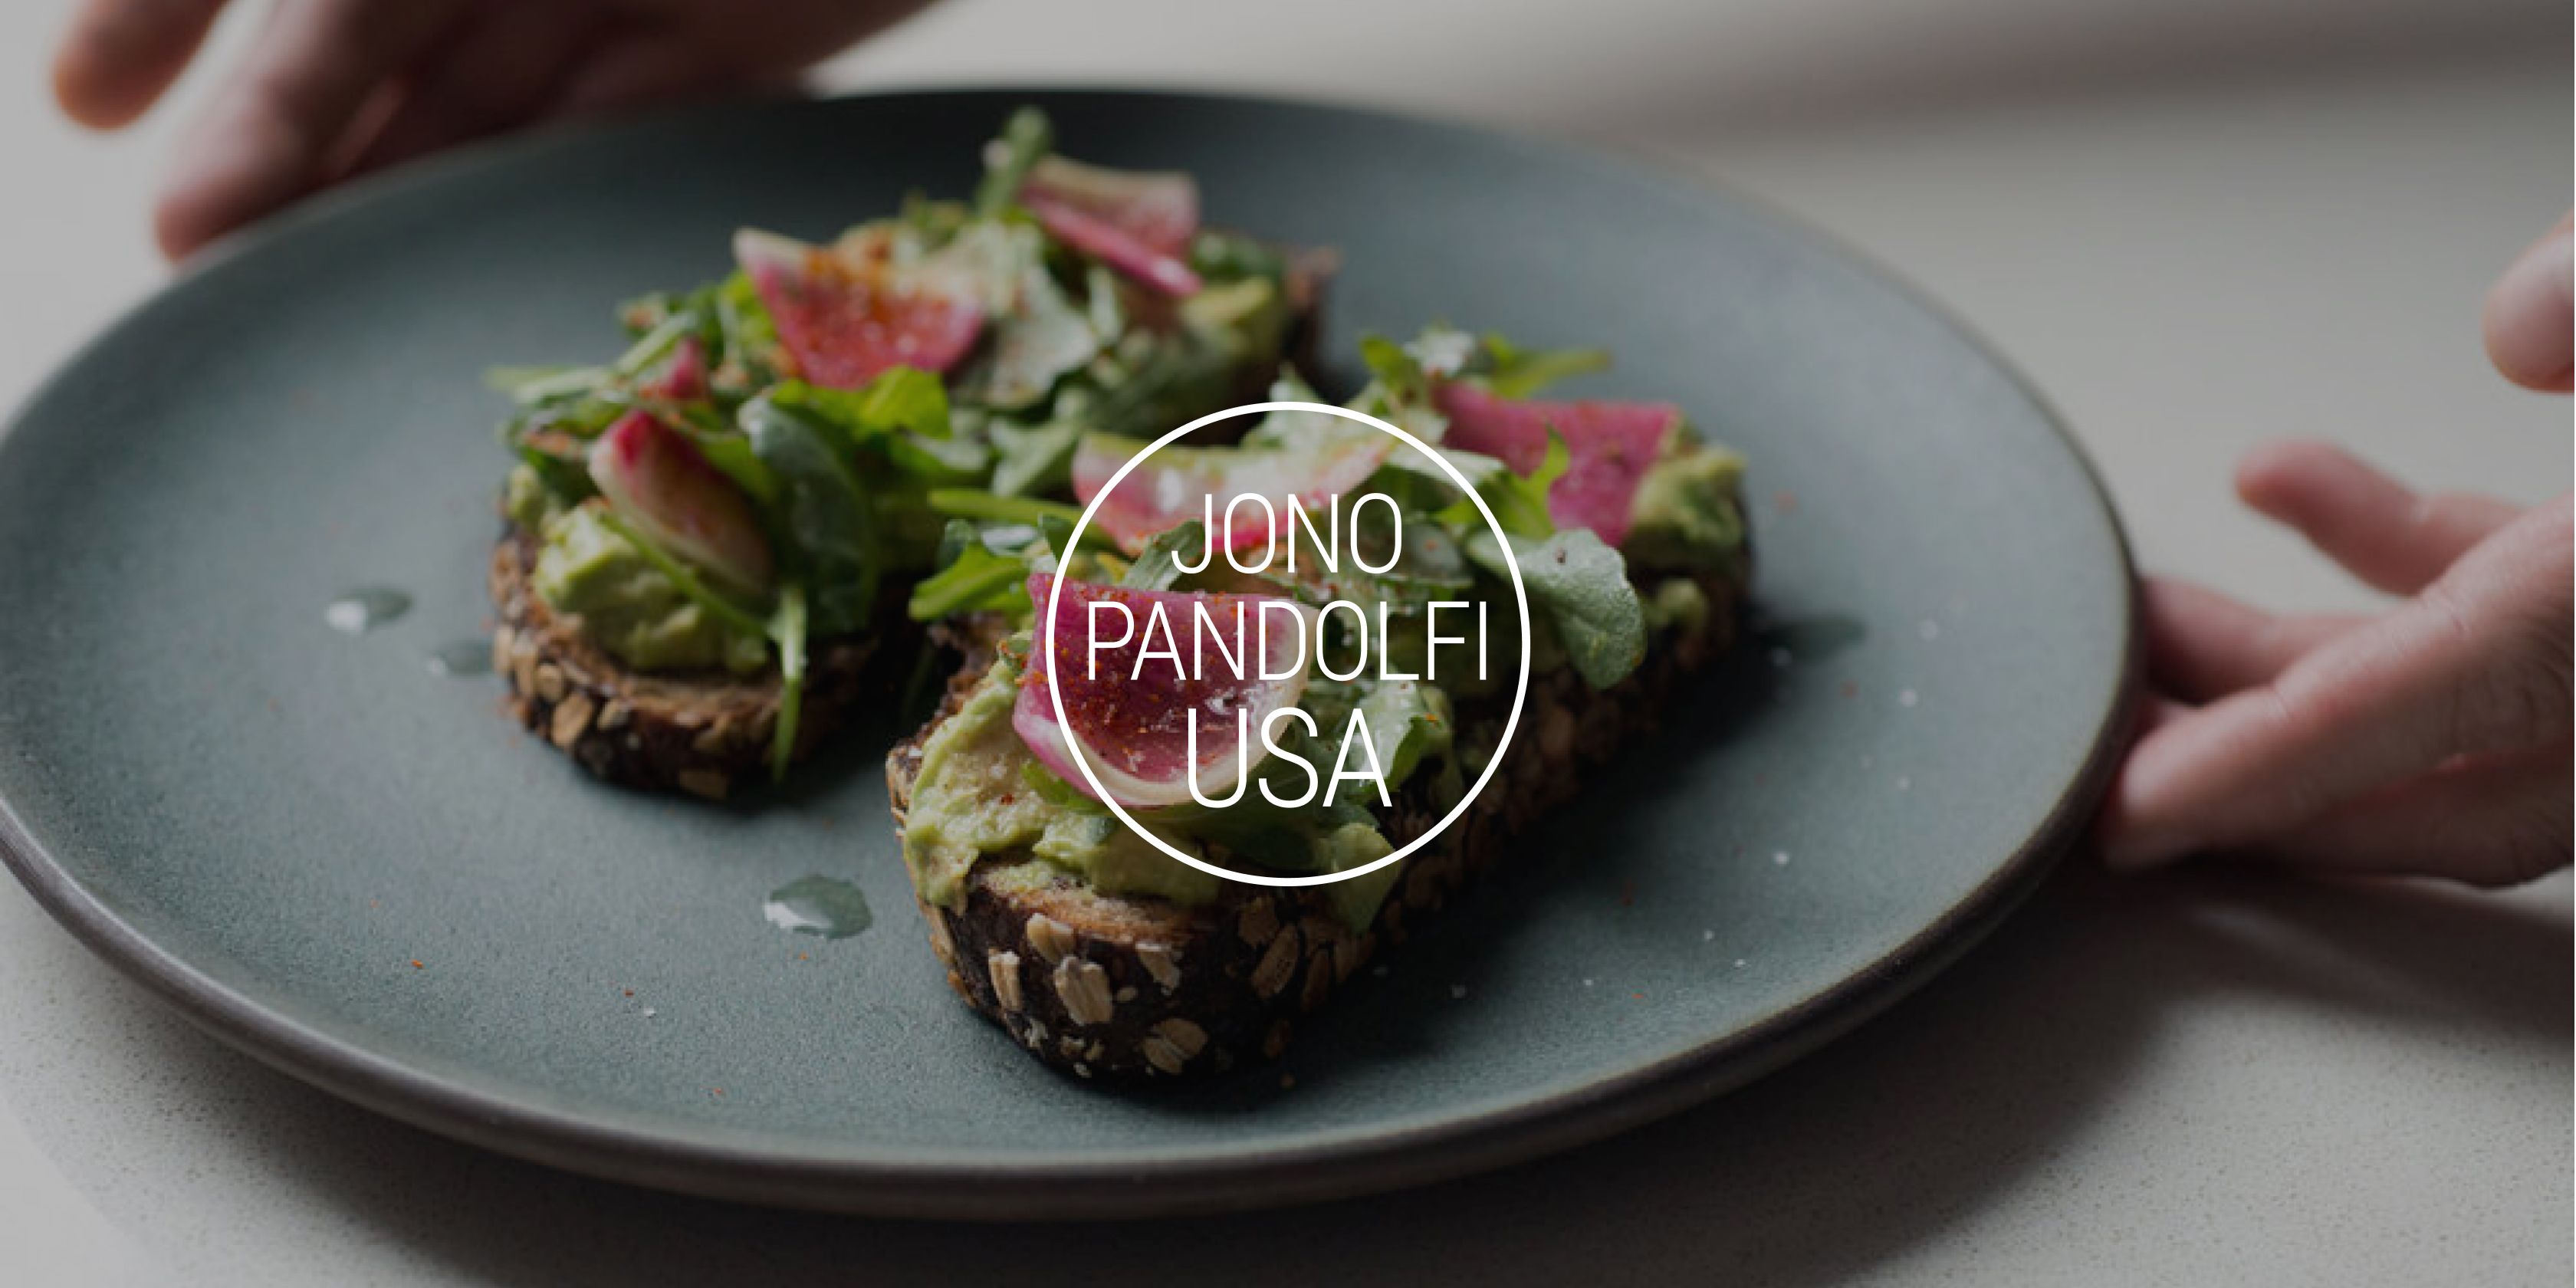 Jono Pandolfi logo overlayed on a hand and plate 